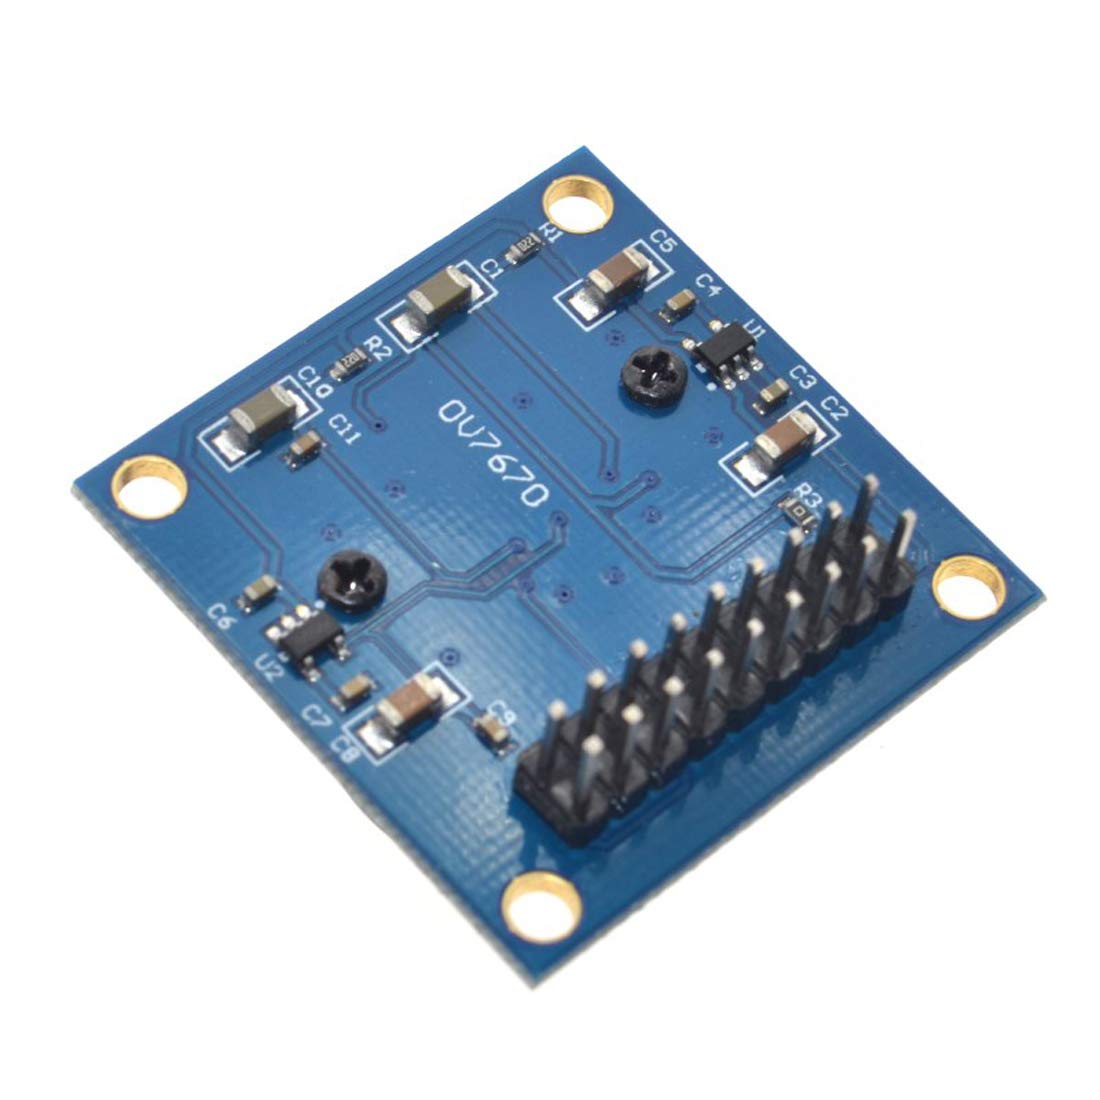 HiLetgo 2pcs OV7670 640x480 0.3Mega 300KP VGA CMOS Camera Module I2C for Arduino ARM FPGA